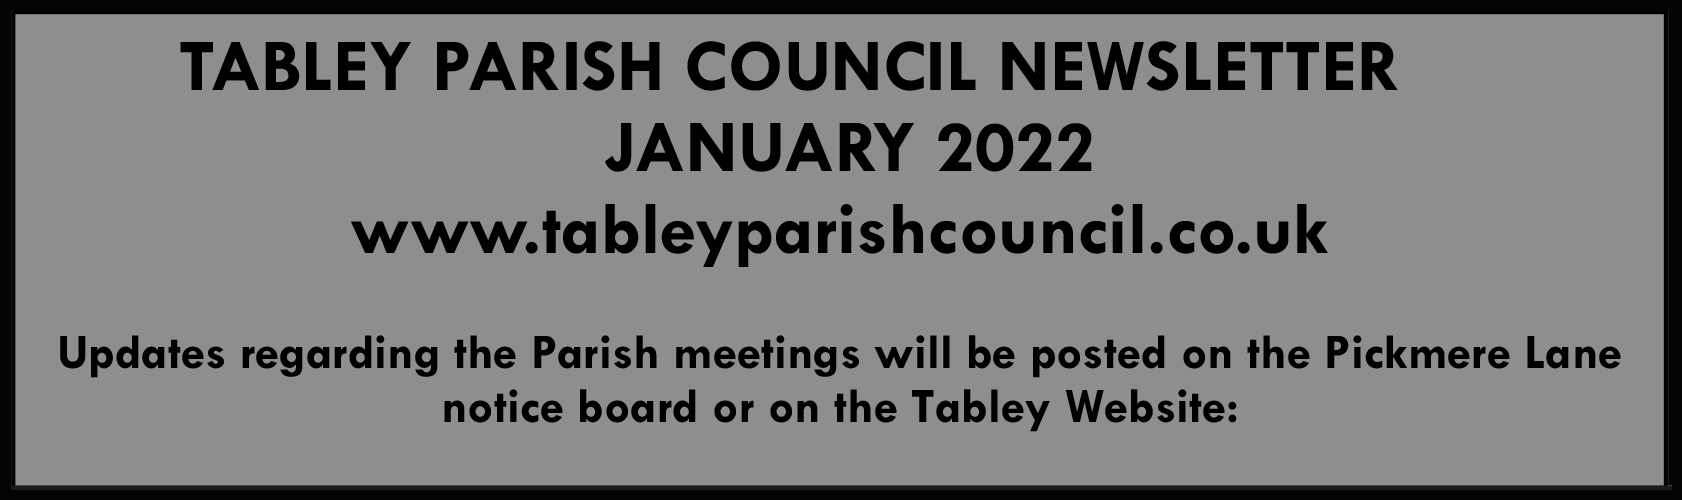 Tabley Parish Council Newsletter